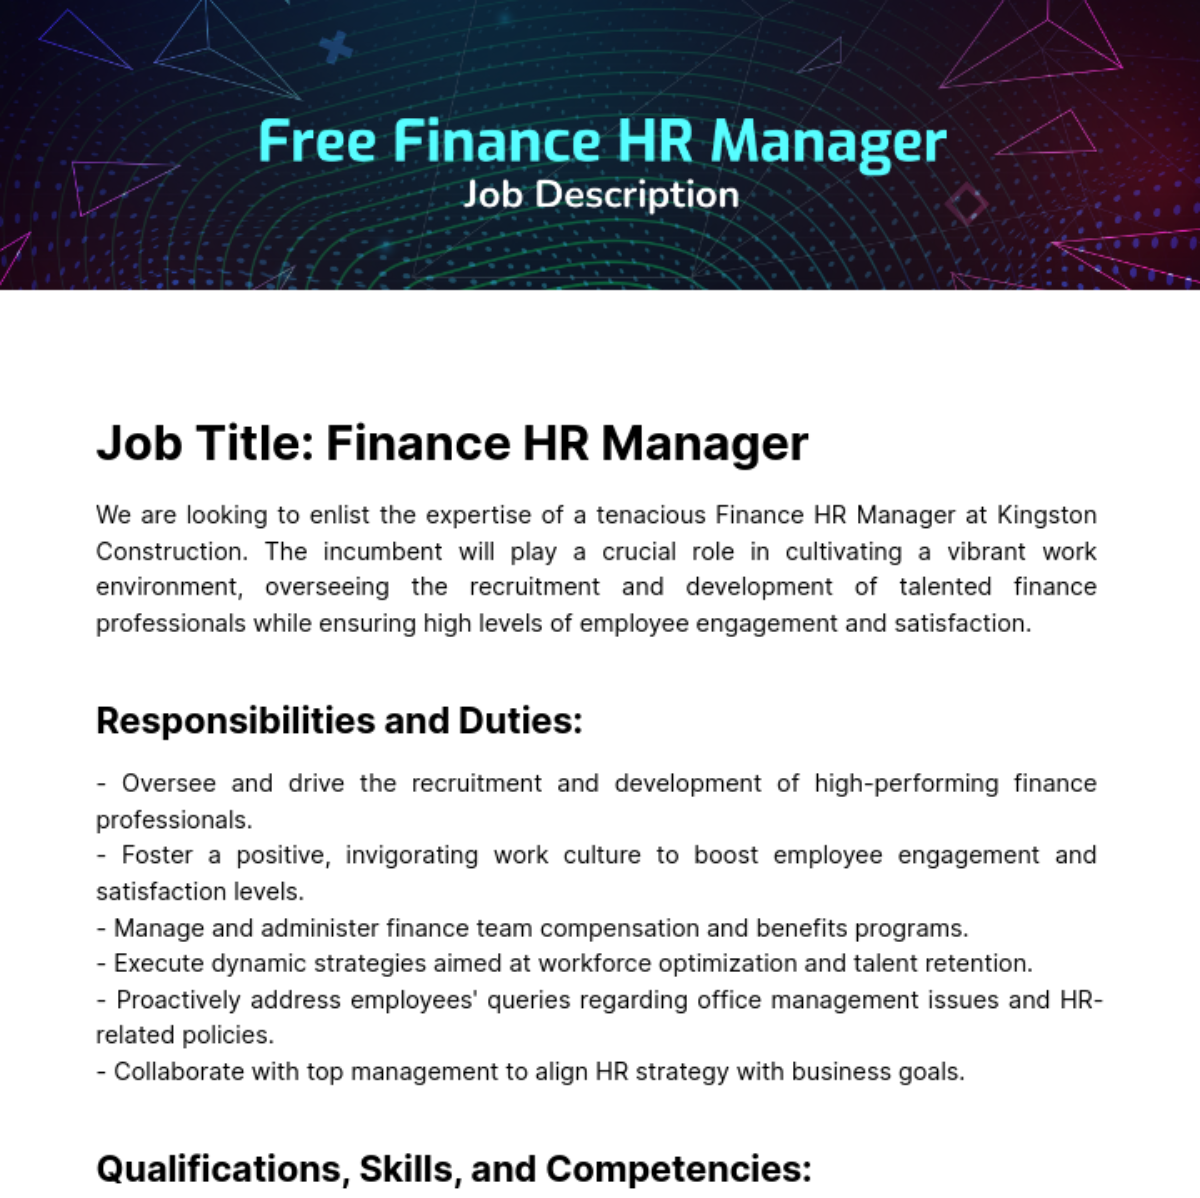 Finance HR Manager Job Description Template